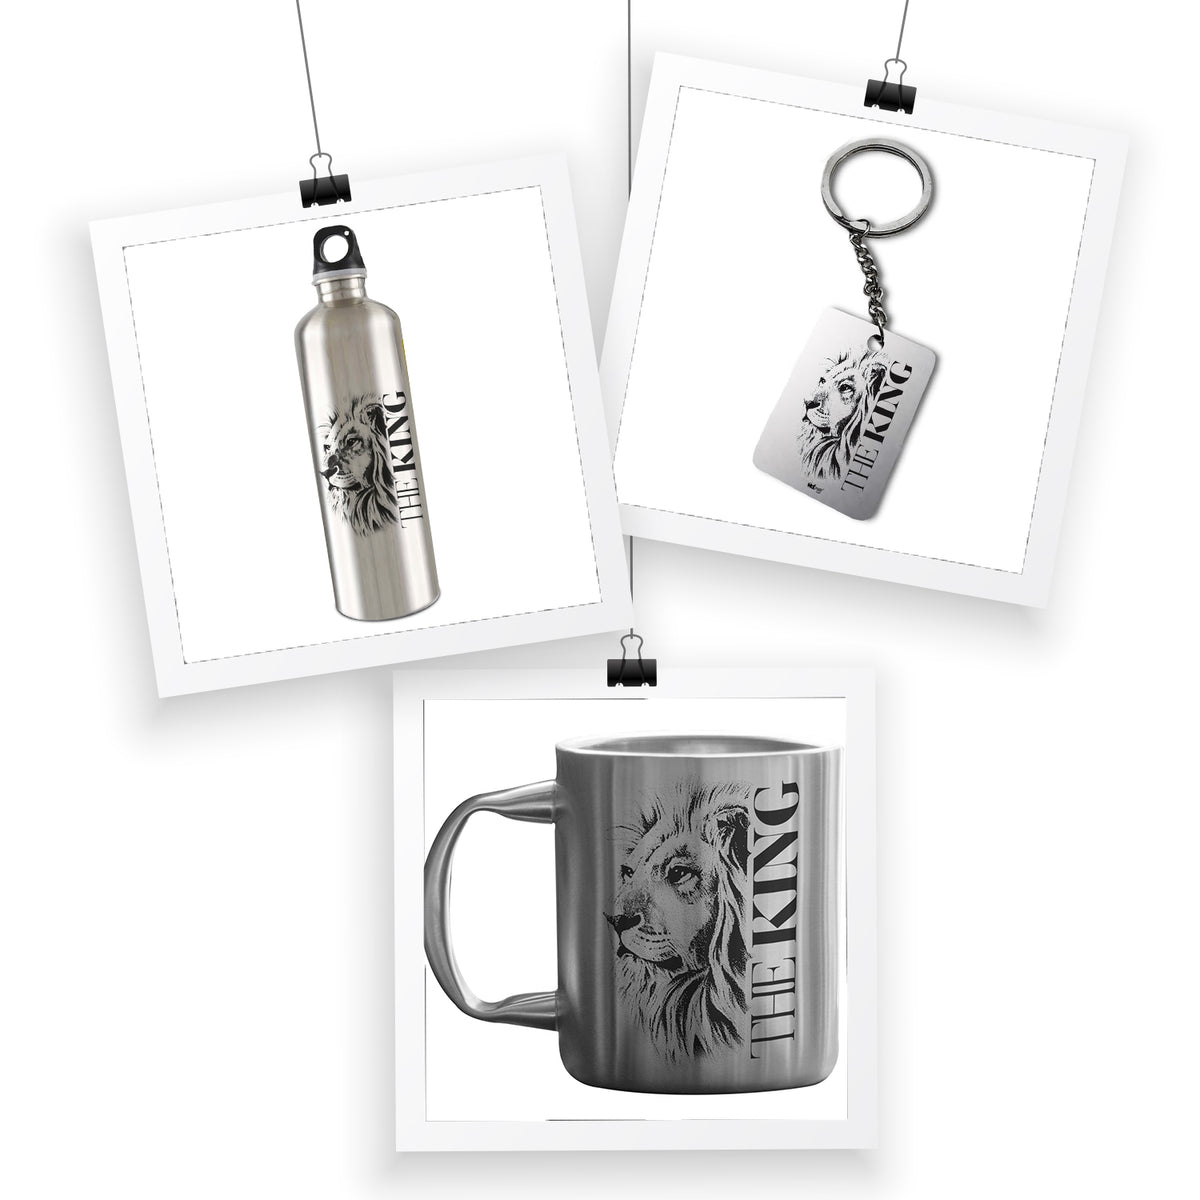 The King - A Perfect Mug Bottle Everyday drinkware Combo with Keychain (1 Mug, 1 Bottle, 1 Keychain)